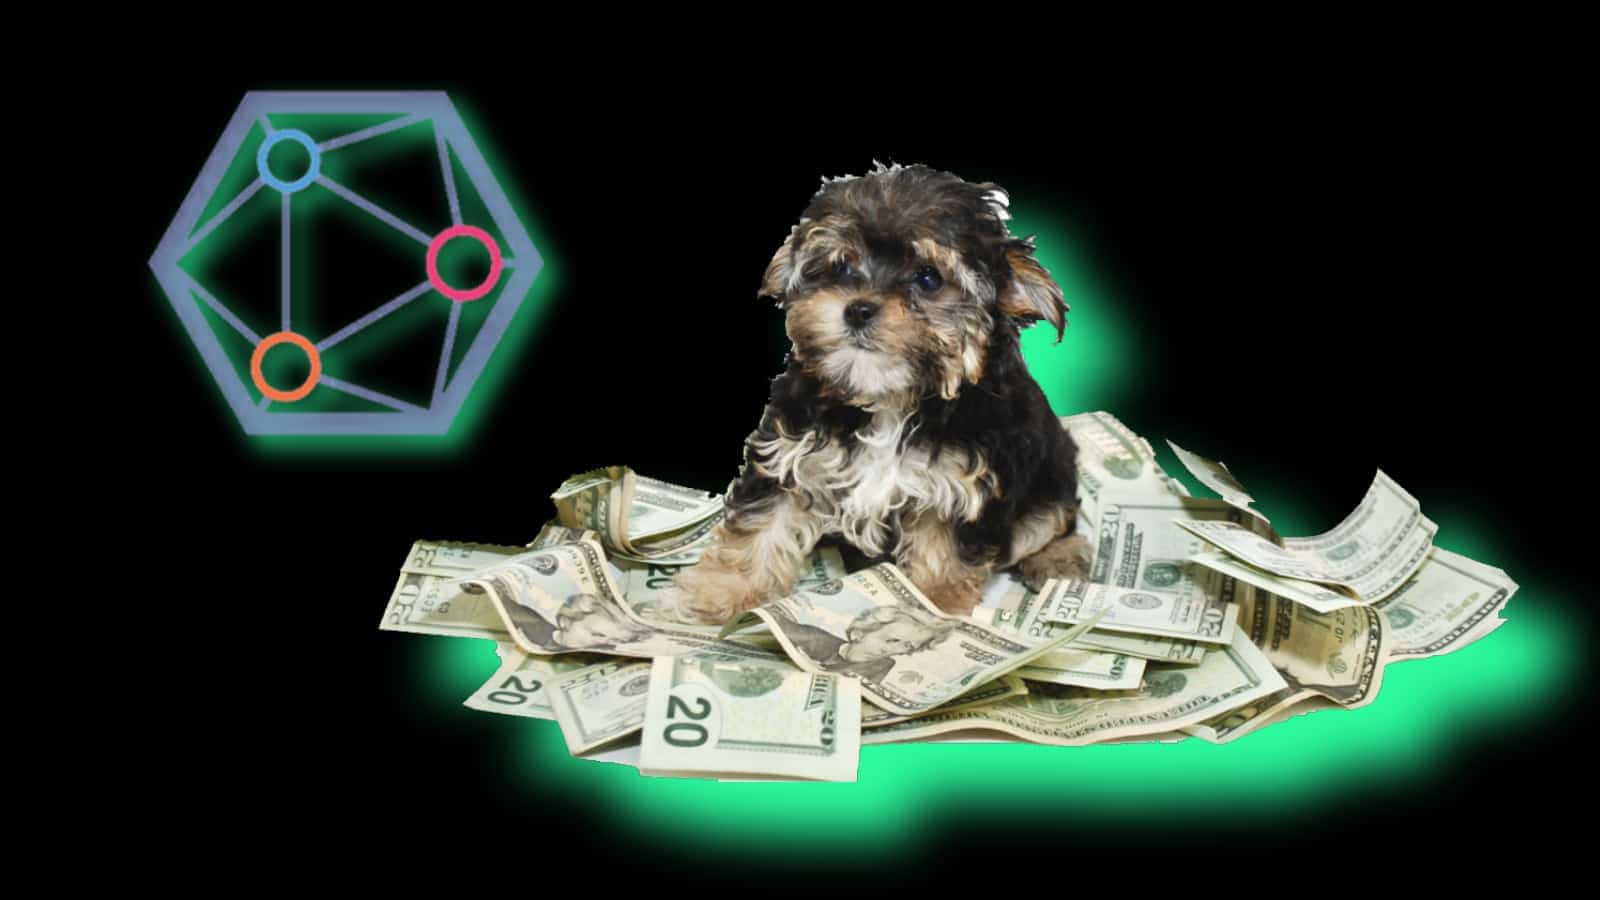 how to buy meta pets crypto